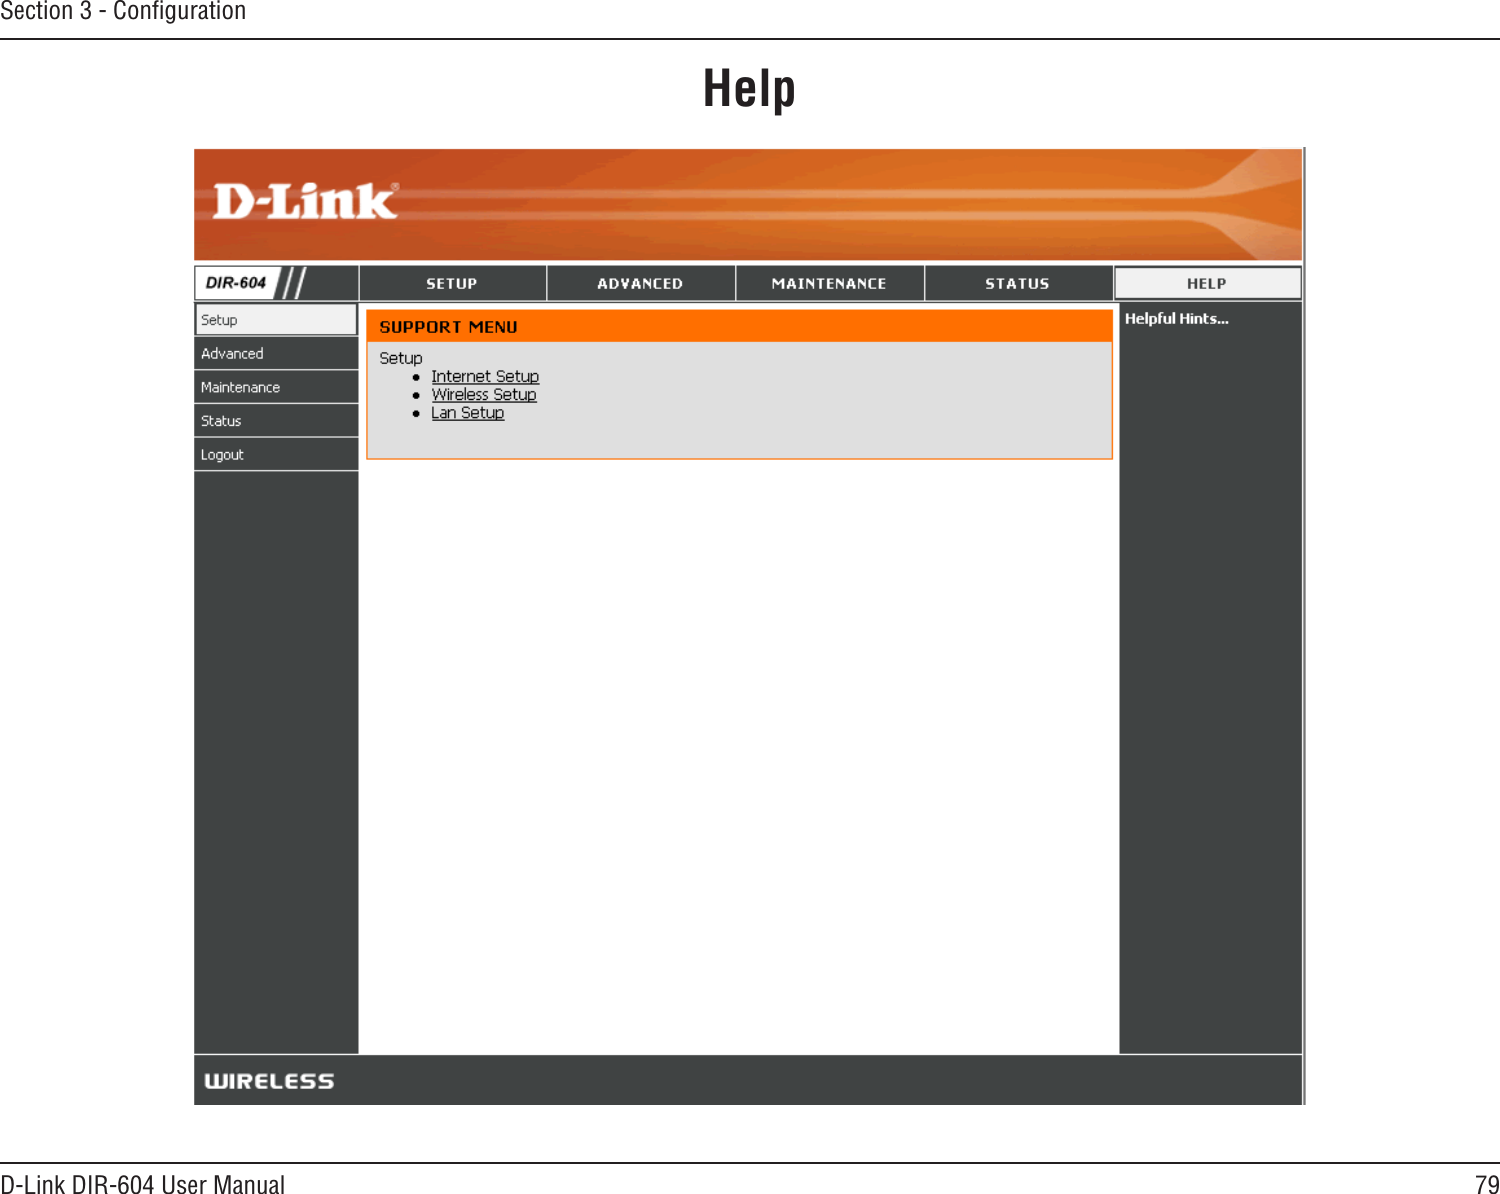 79D-Link DIR-604 User ManualSection 3 - ConﬁgurationHelp